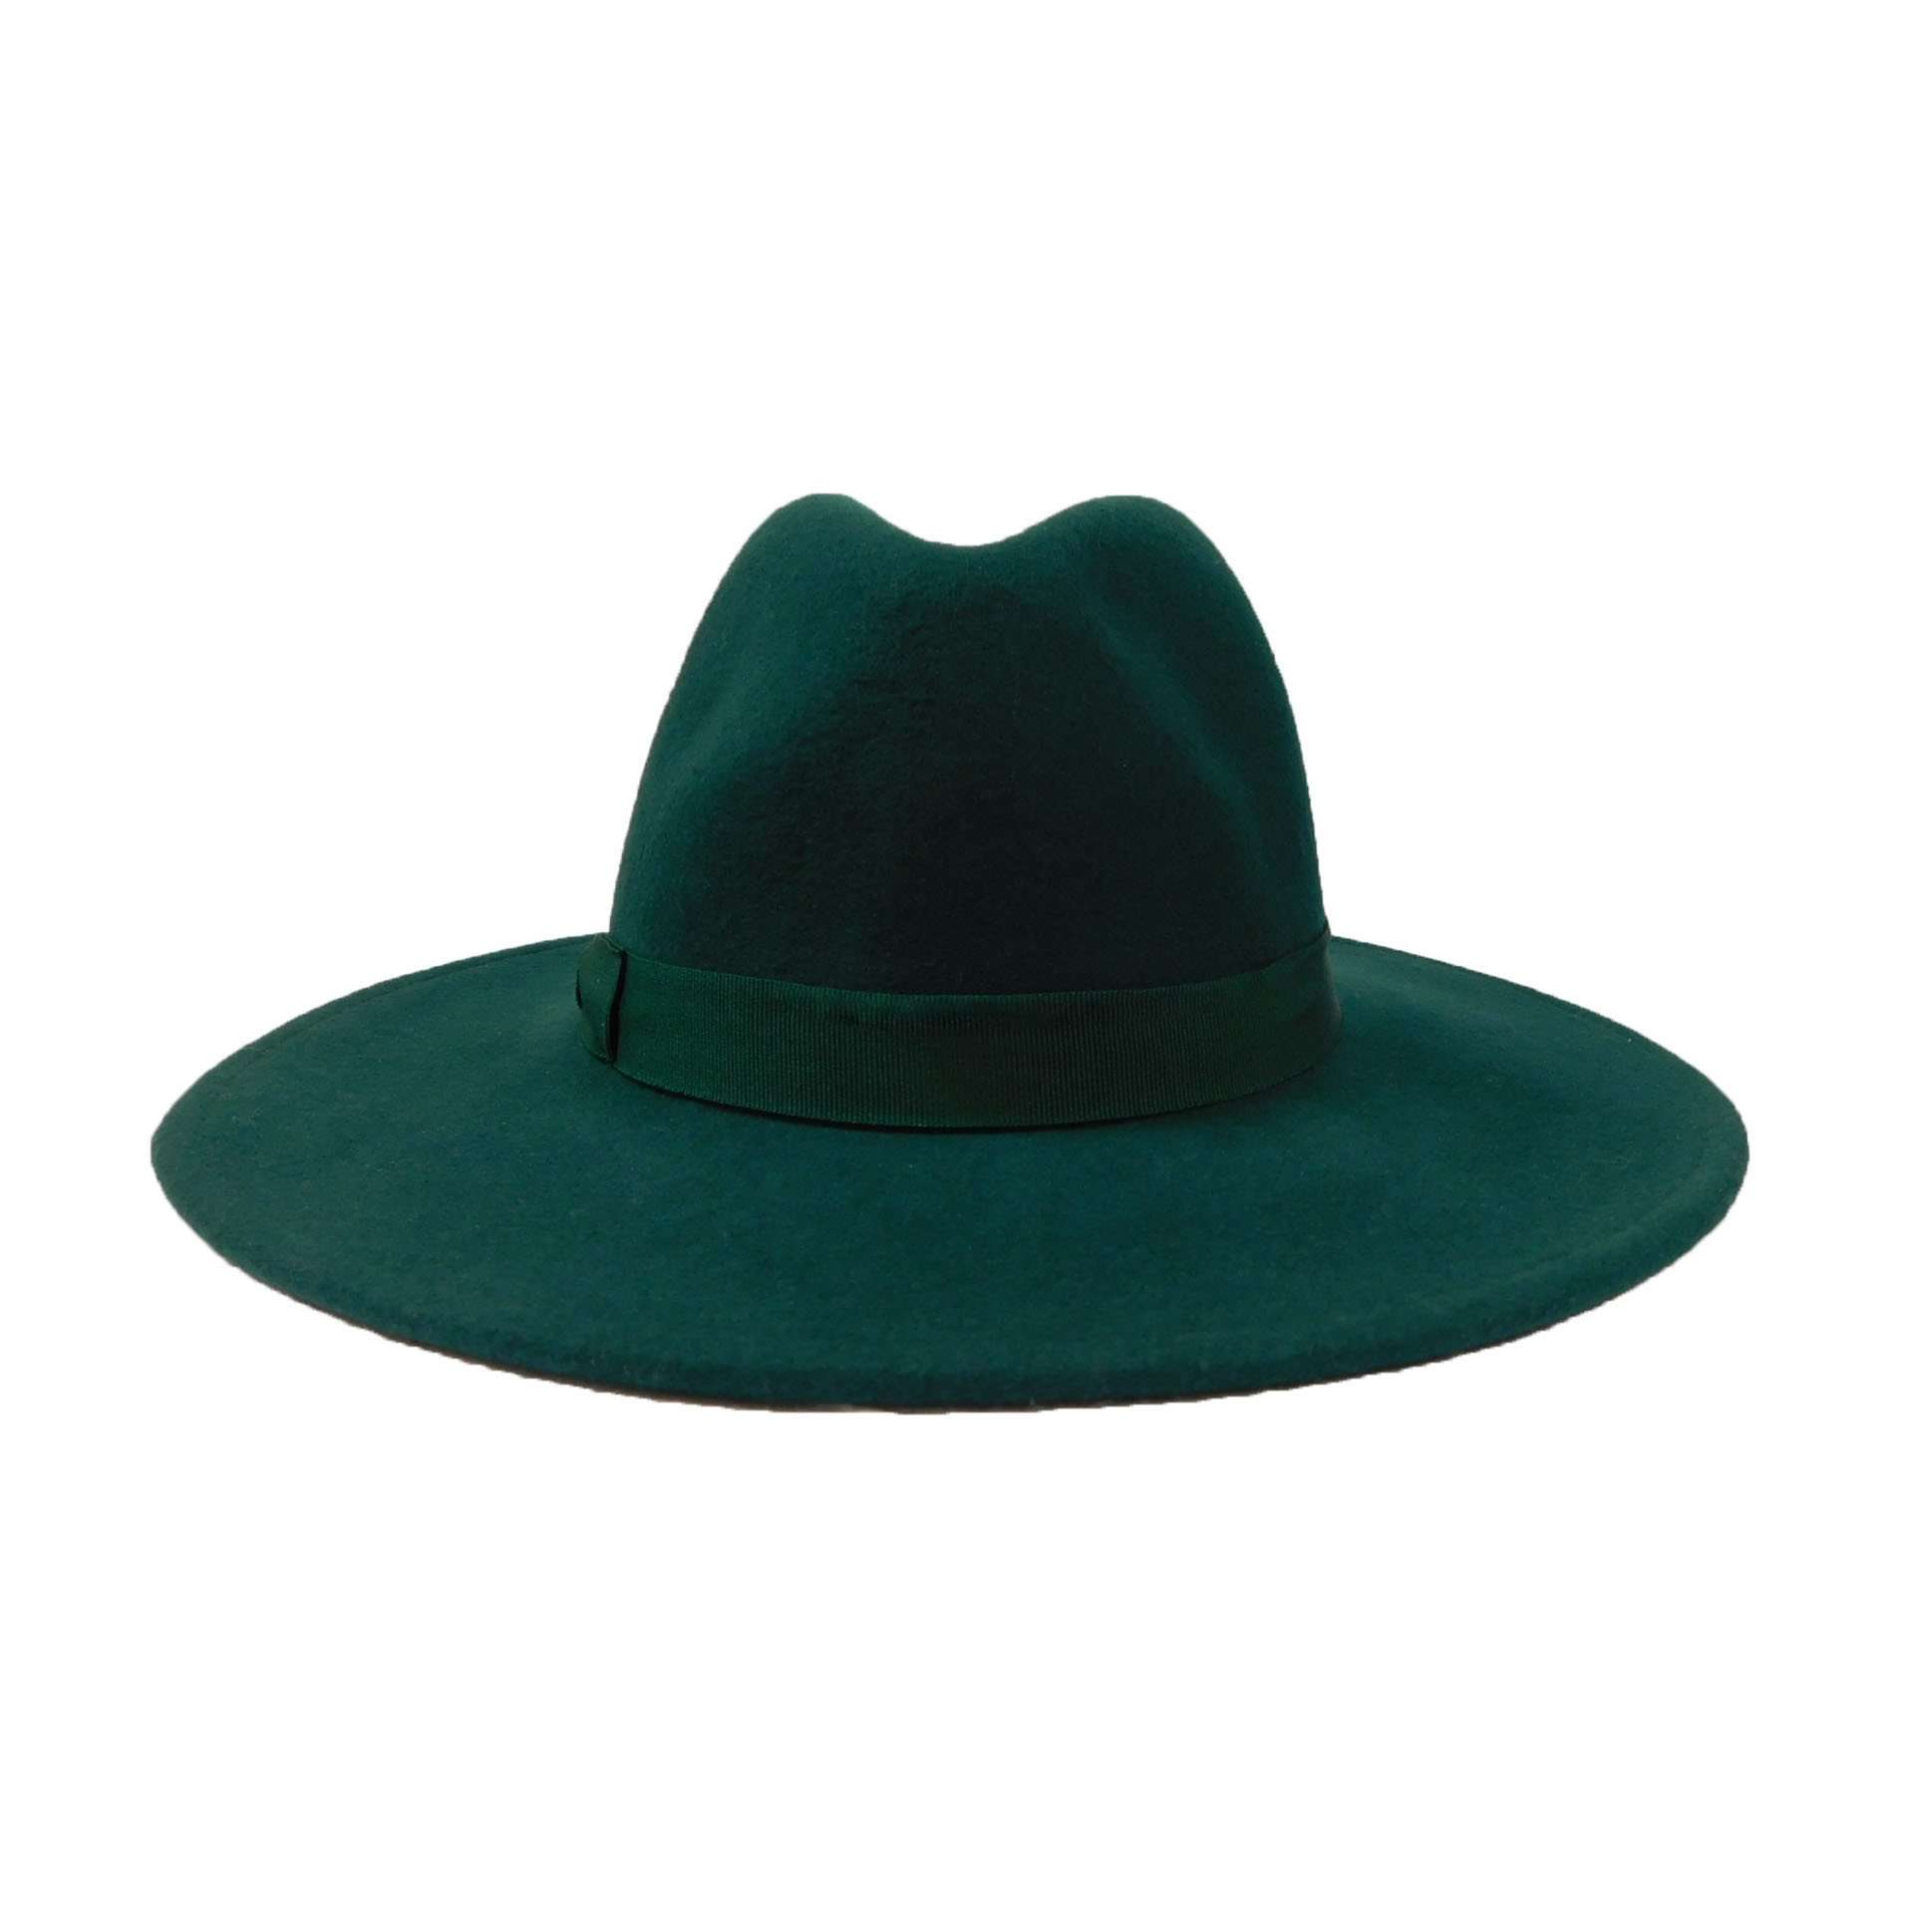 Floppy Safari-Wool Felt Safari Hat SetarTrading Hats WWWF204FG Forest Green  